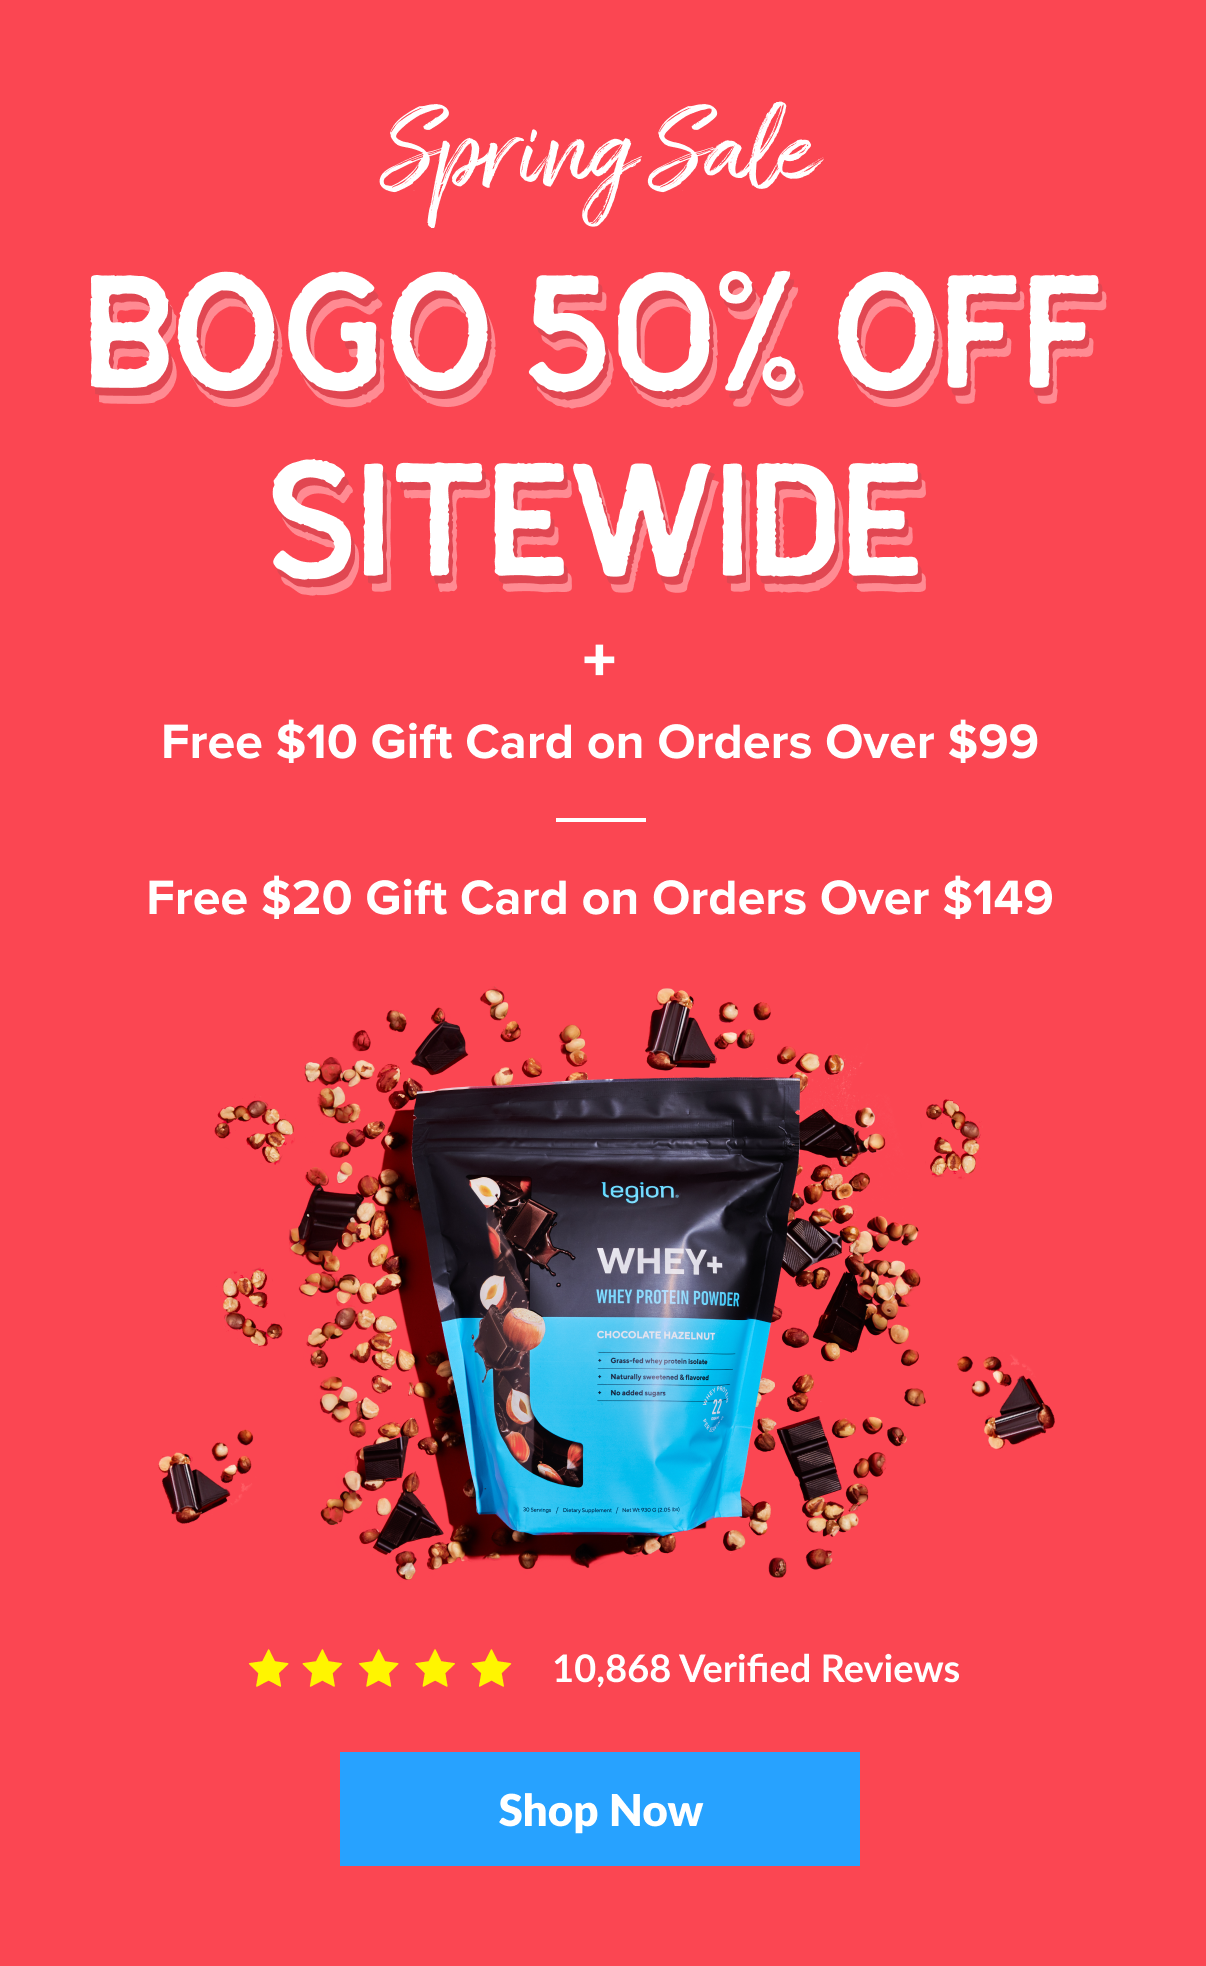 Spring Sale! BOGO 50% off sitewide + free gift cards!